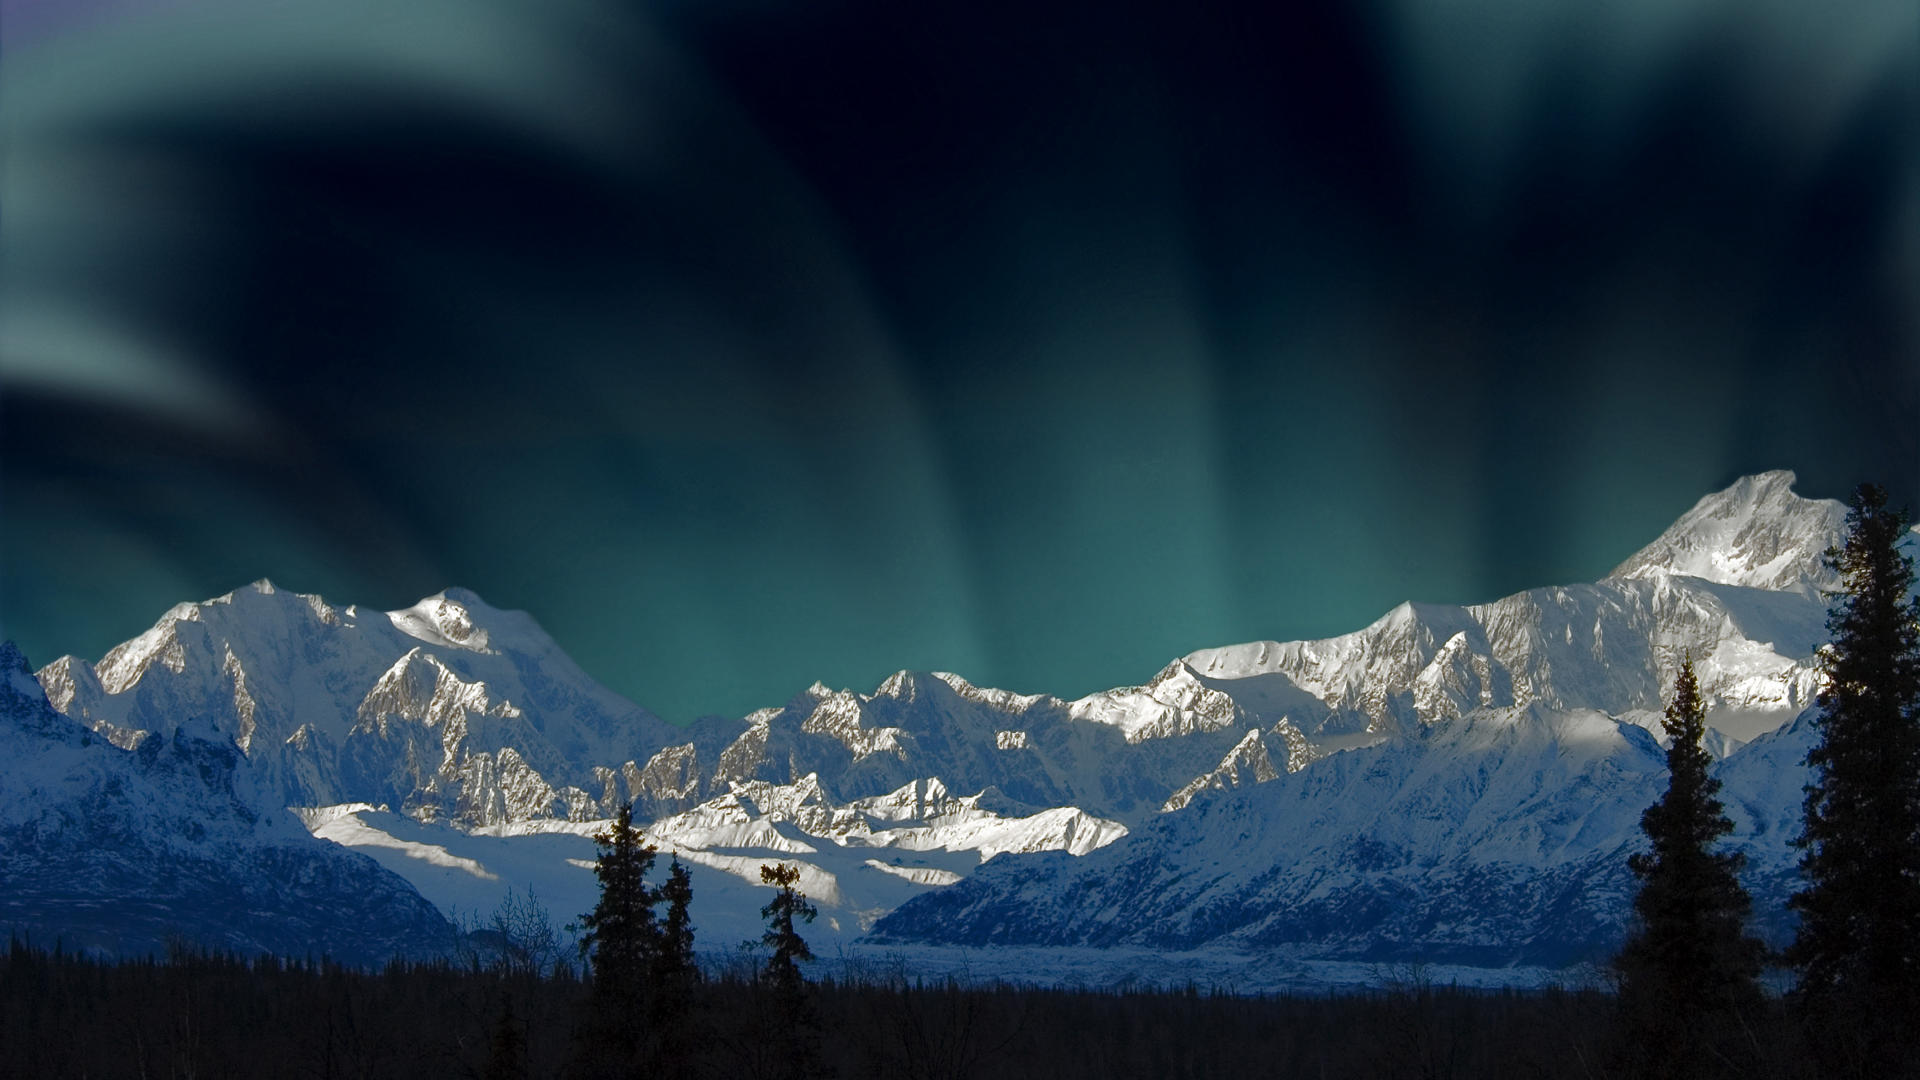 Alaska Cool Background And Wallpaper For Your Desktop